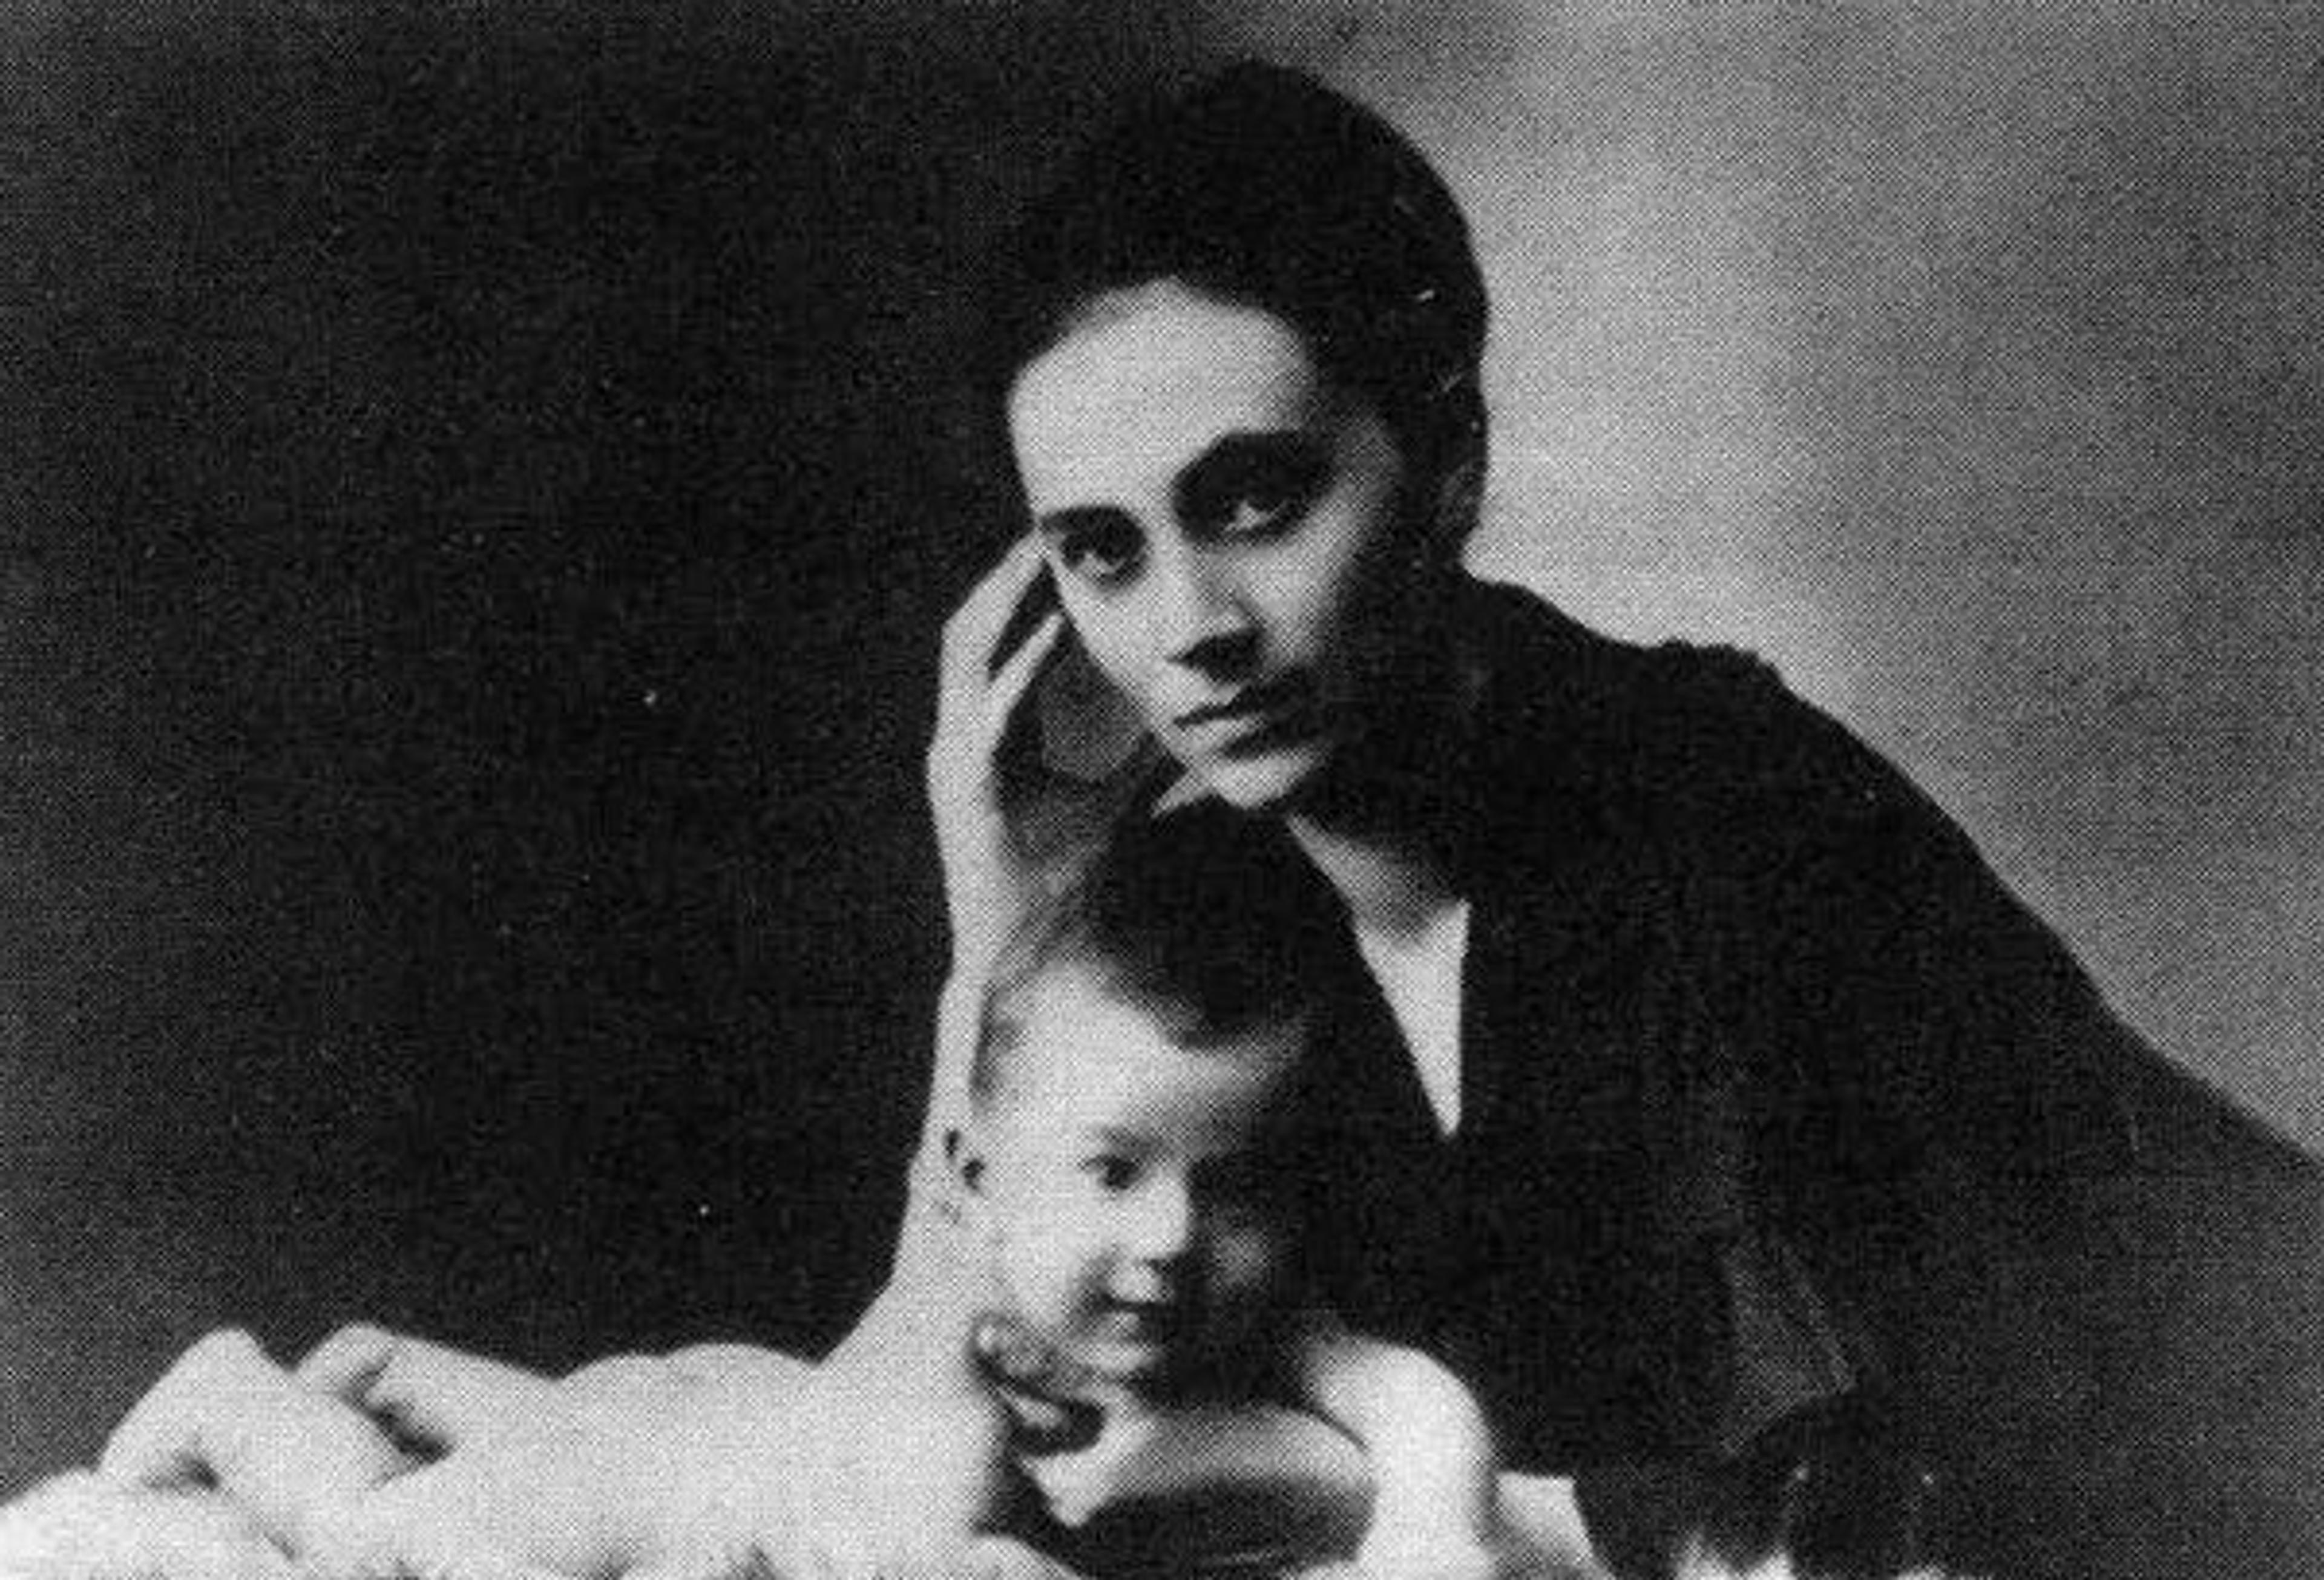 Kamila Stösslová with her son Otto, 1917. Public-domain image accessed through Wikimedia Commons